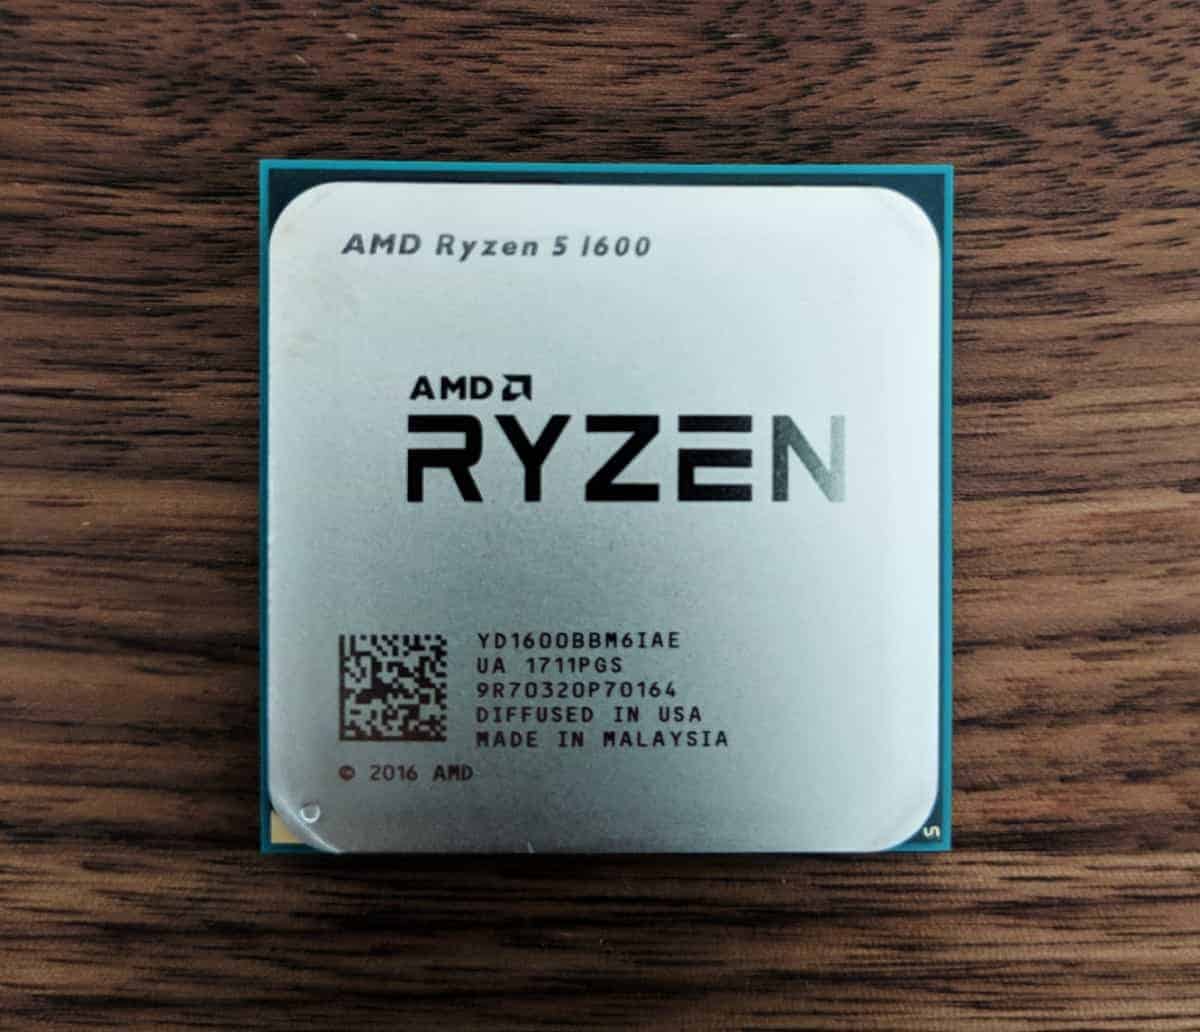 Amd ryzen сколько ядер. AMD Ryzen 5 1600. Процессор АМД райзен 5. Процессор AMD Ryzen 5 1600x. Ryzen 2700x.